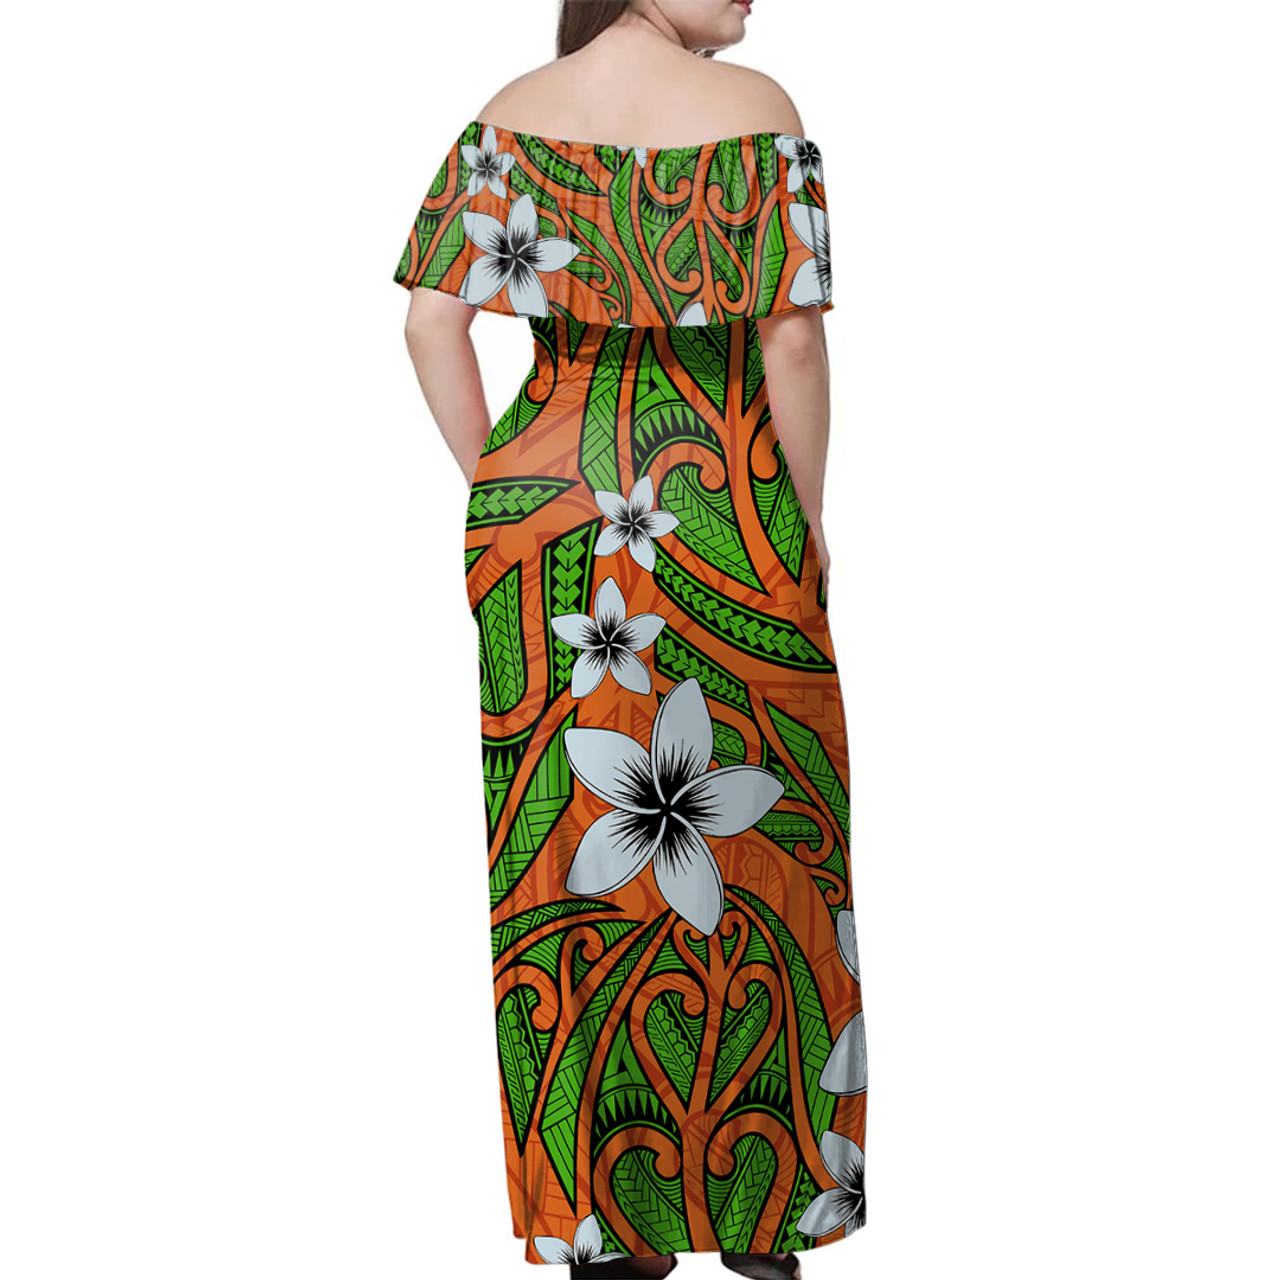 Polynesian Combo Dress And Shirt Hawaiian Maori Pattern Plumeria